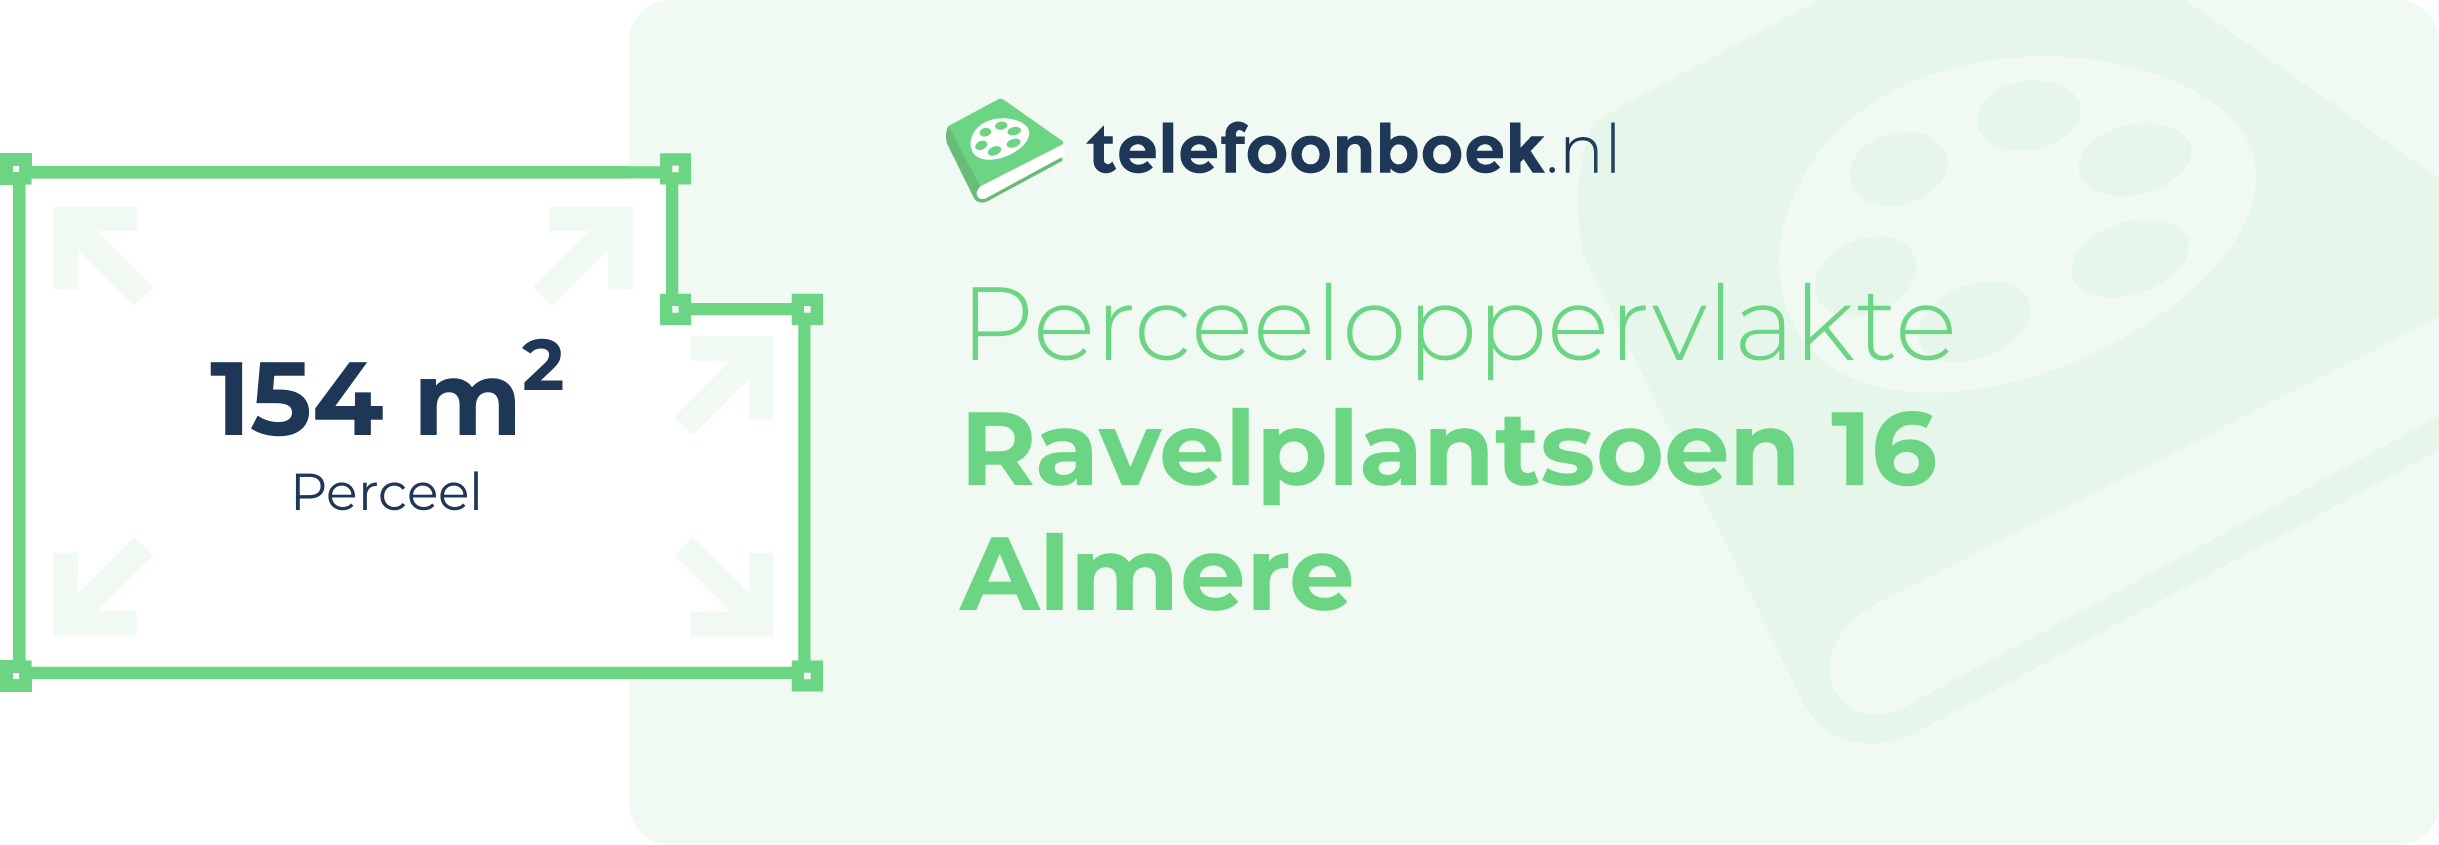 Perceeloppervlakte Ravelplantsoen 16 Almere